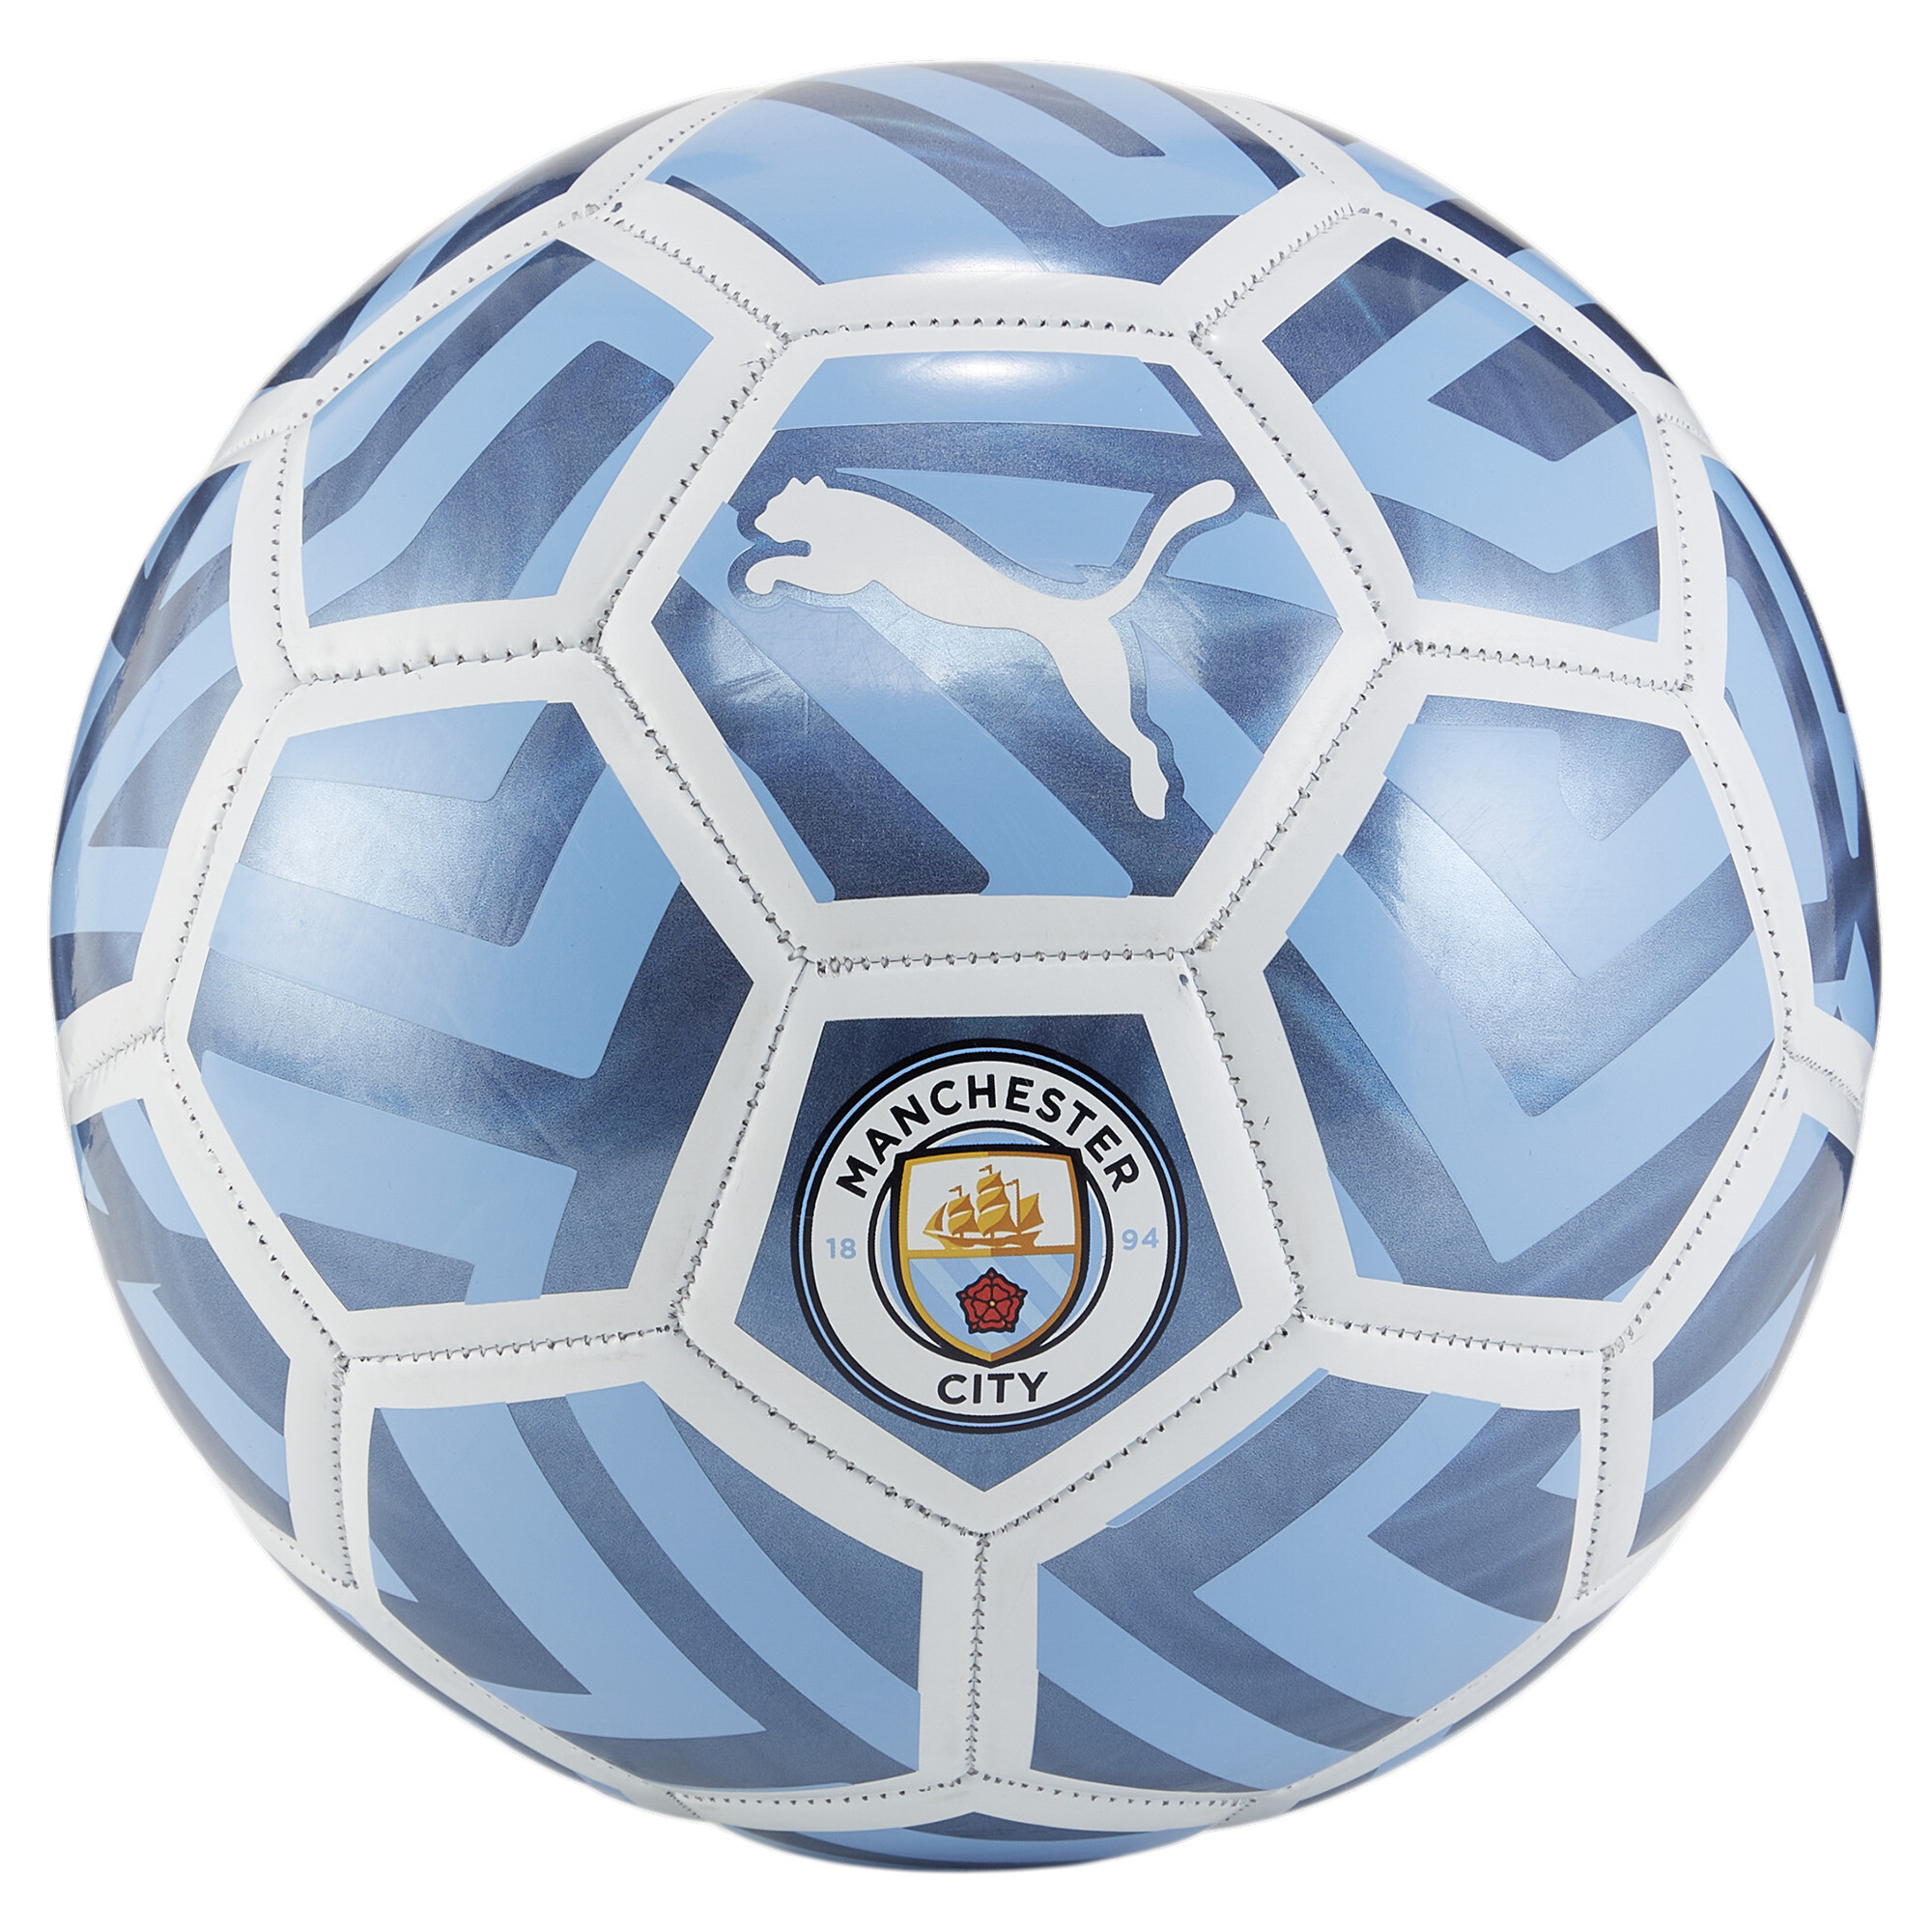 Puma Manchester City Fan Football, White, Size 5, Accessories